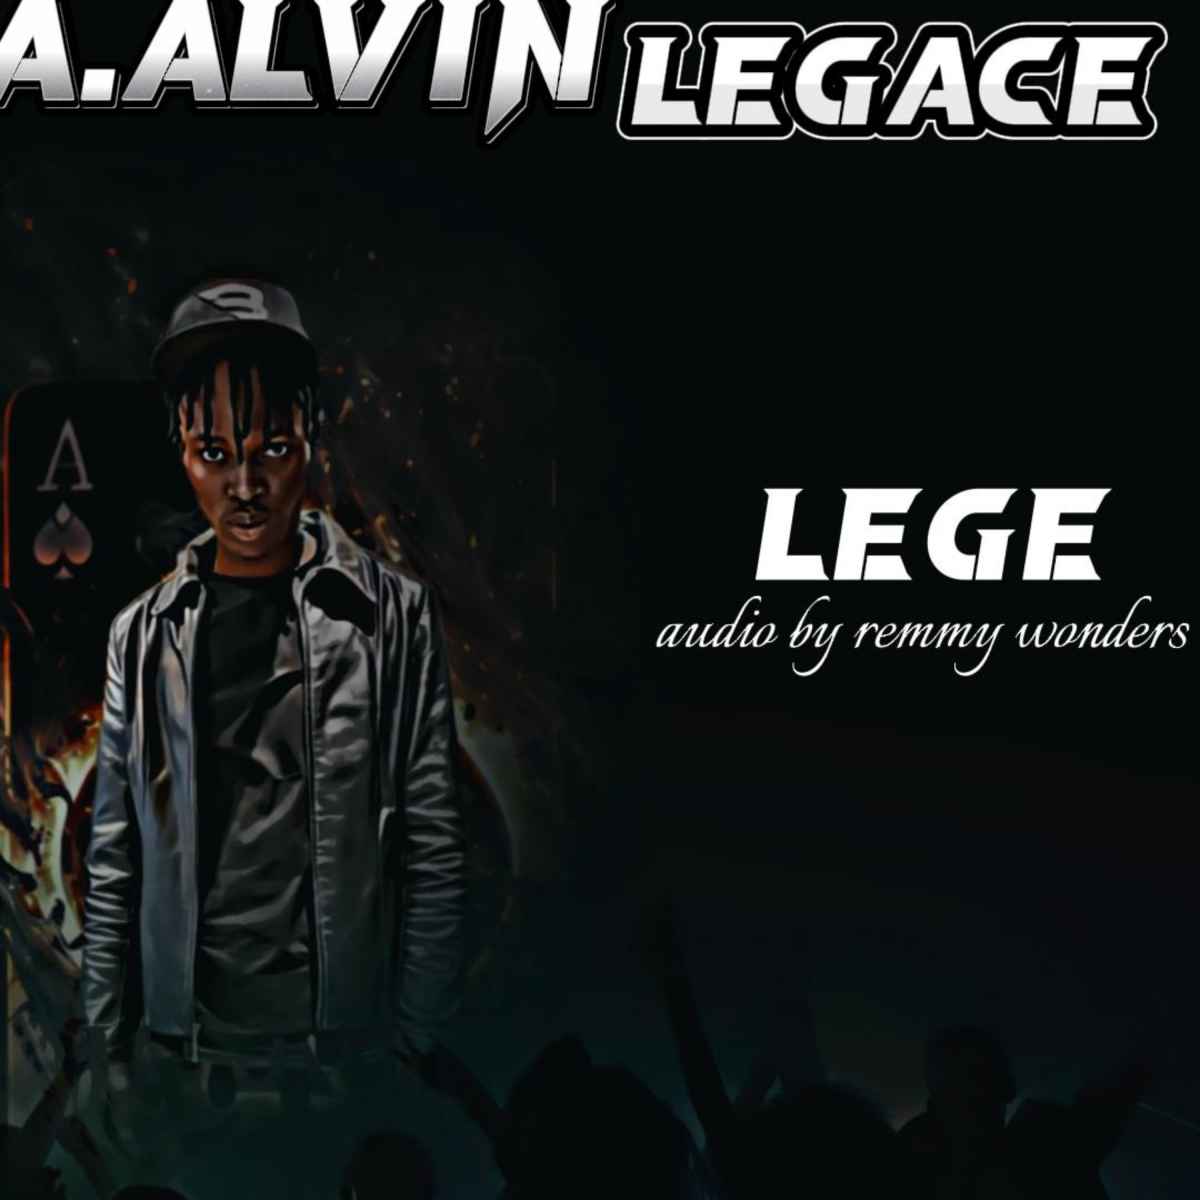 Lege by A-alvin Legace